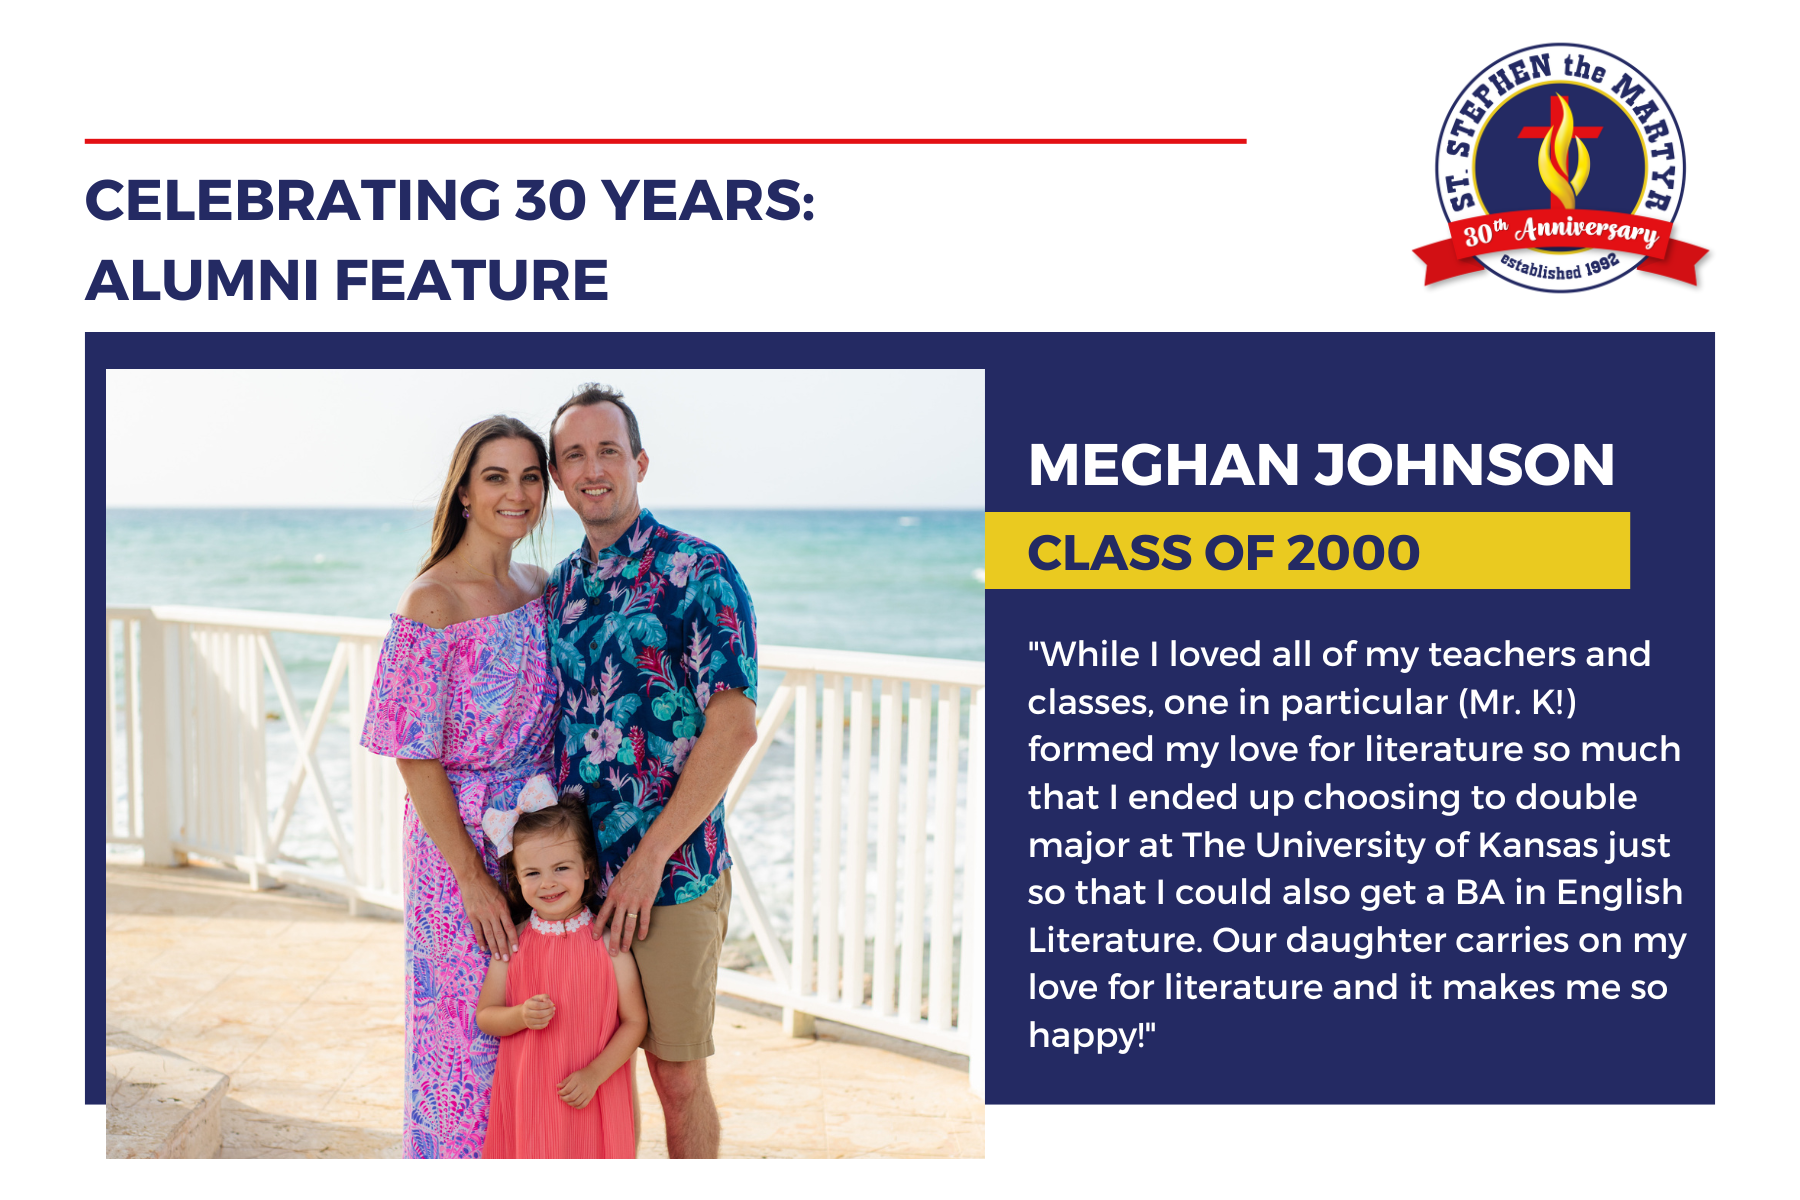 Alumni Feature: Meghan Johnson, Class of 2000